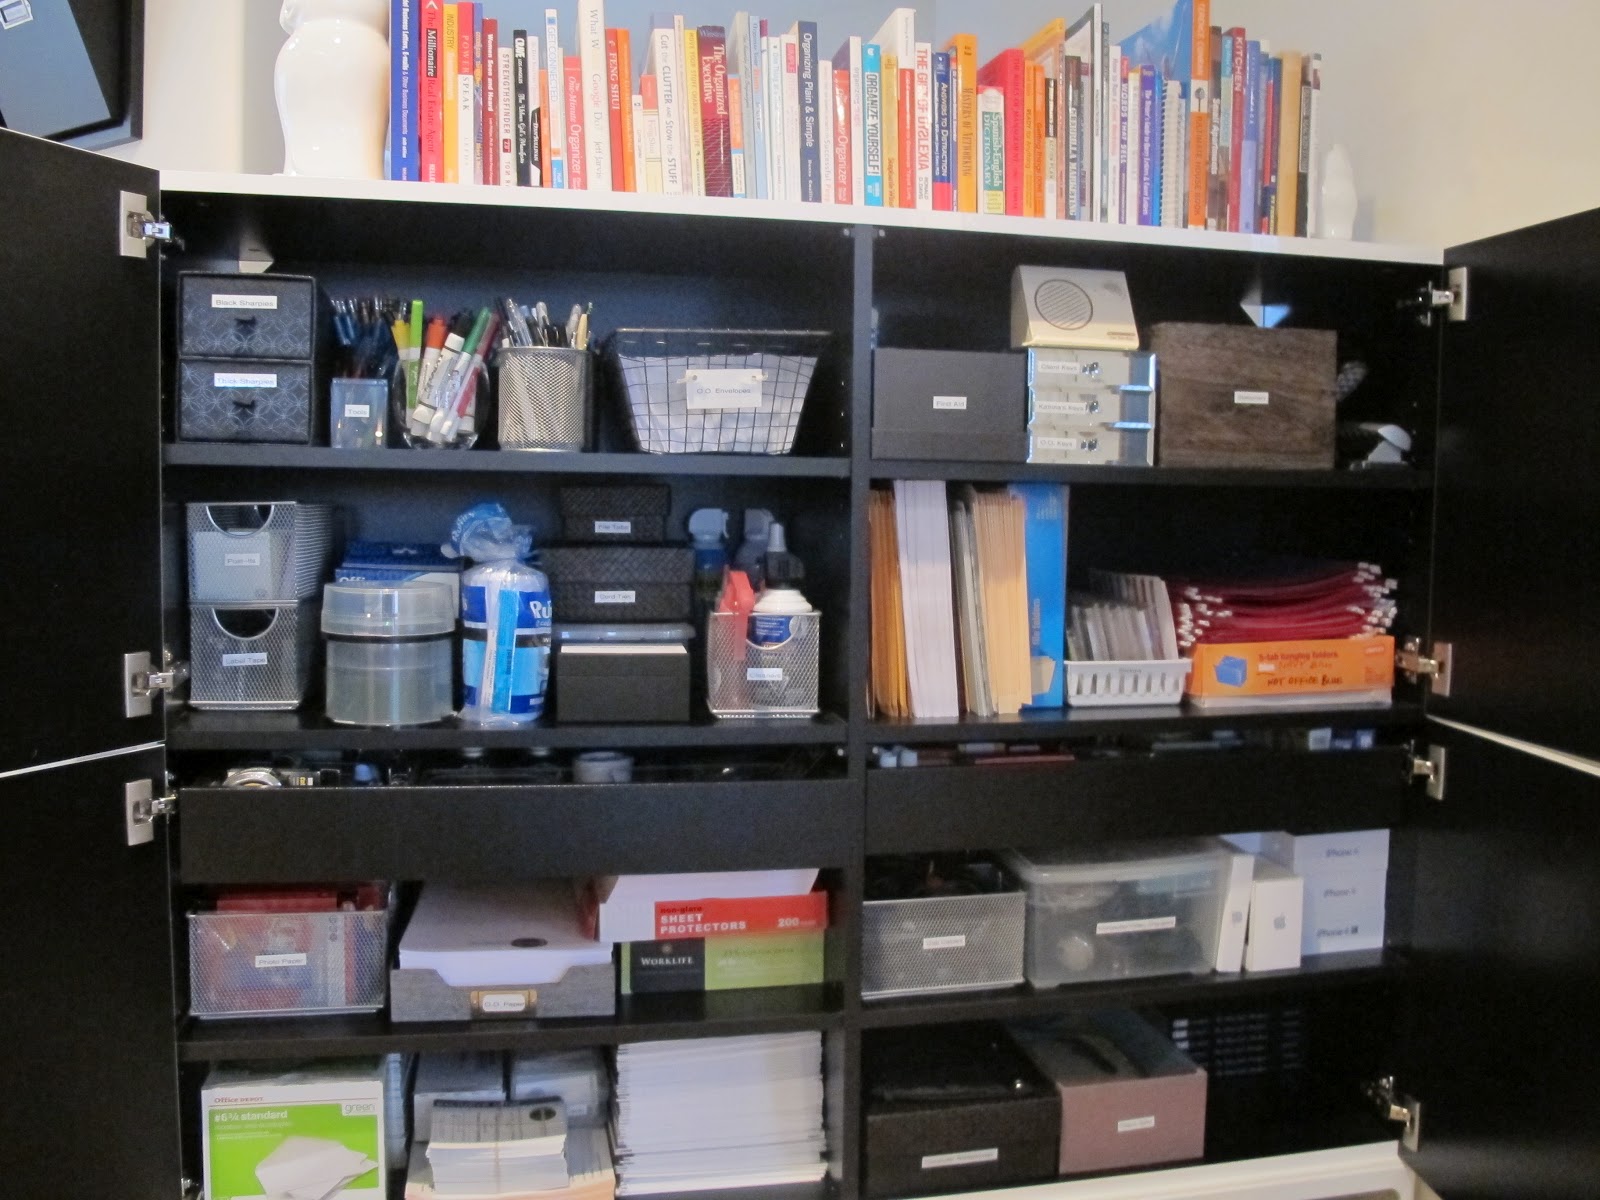 Supply Room | Office supply organization, Office supplies closet